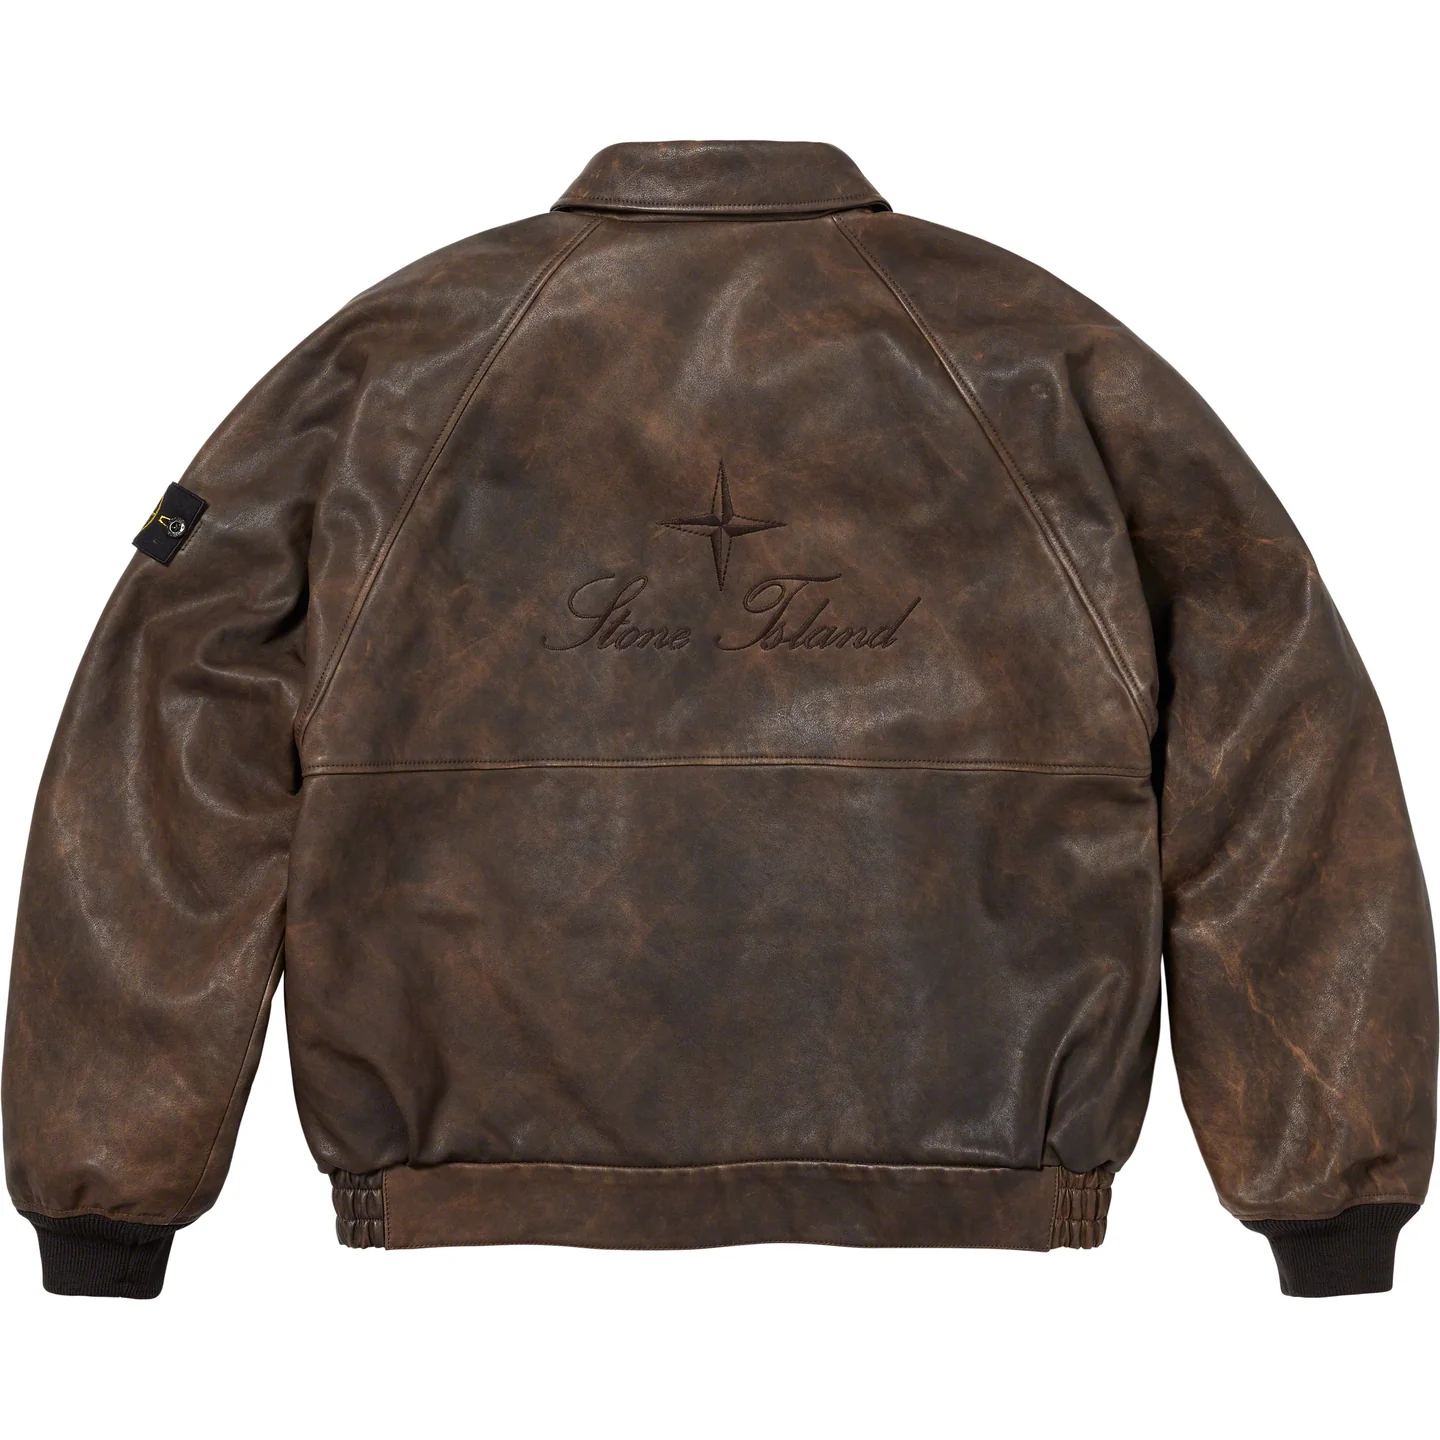 Supreme Supreme®/Stone Island® Leather Bomber Jacket